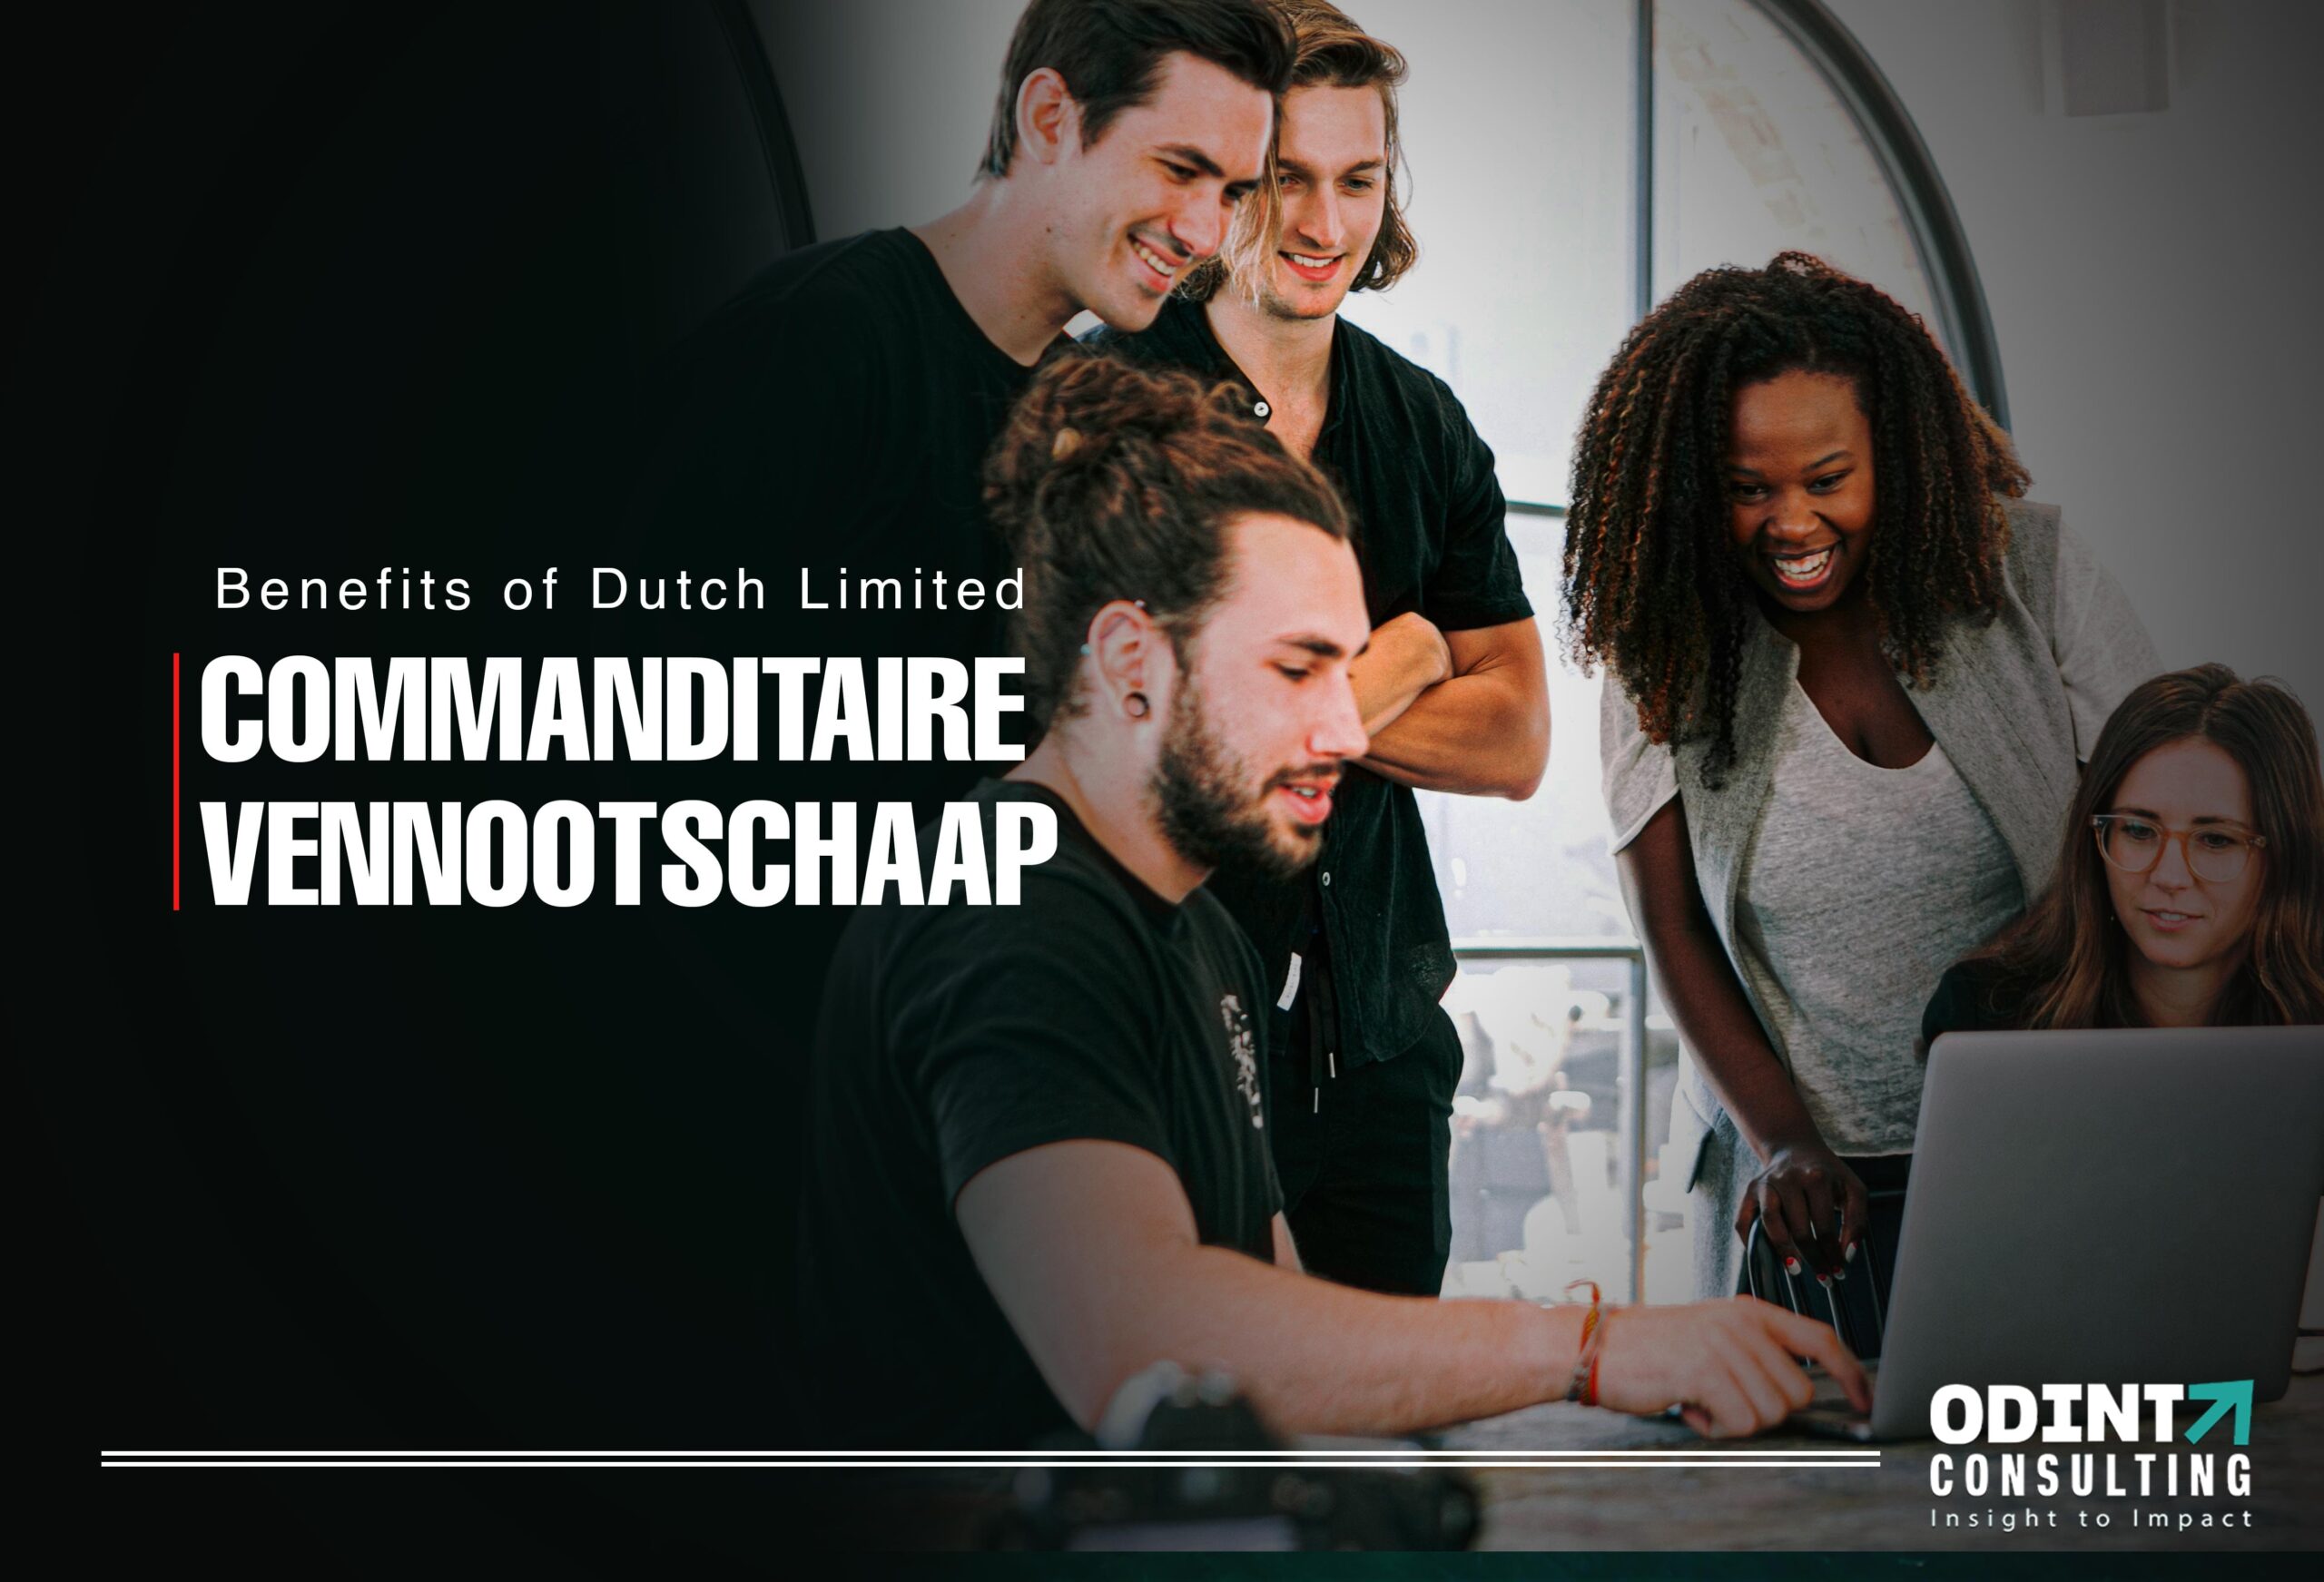 6 Benefits of Dutch Commanditaire Vennootschaap – Limited Partnership